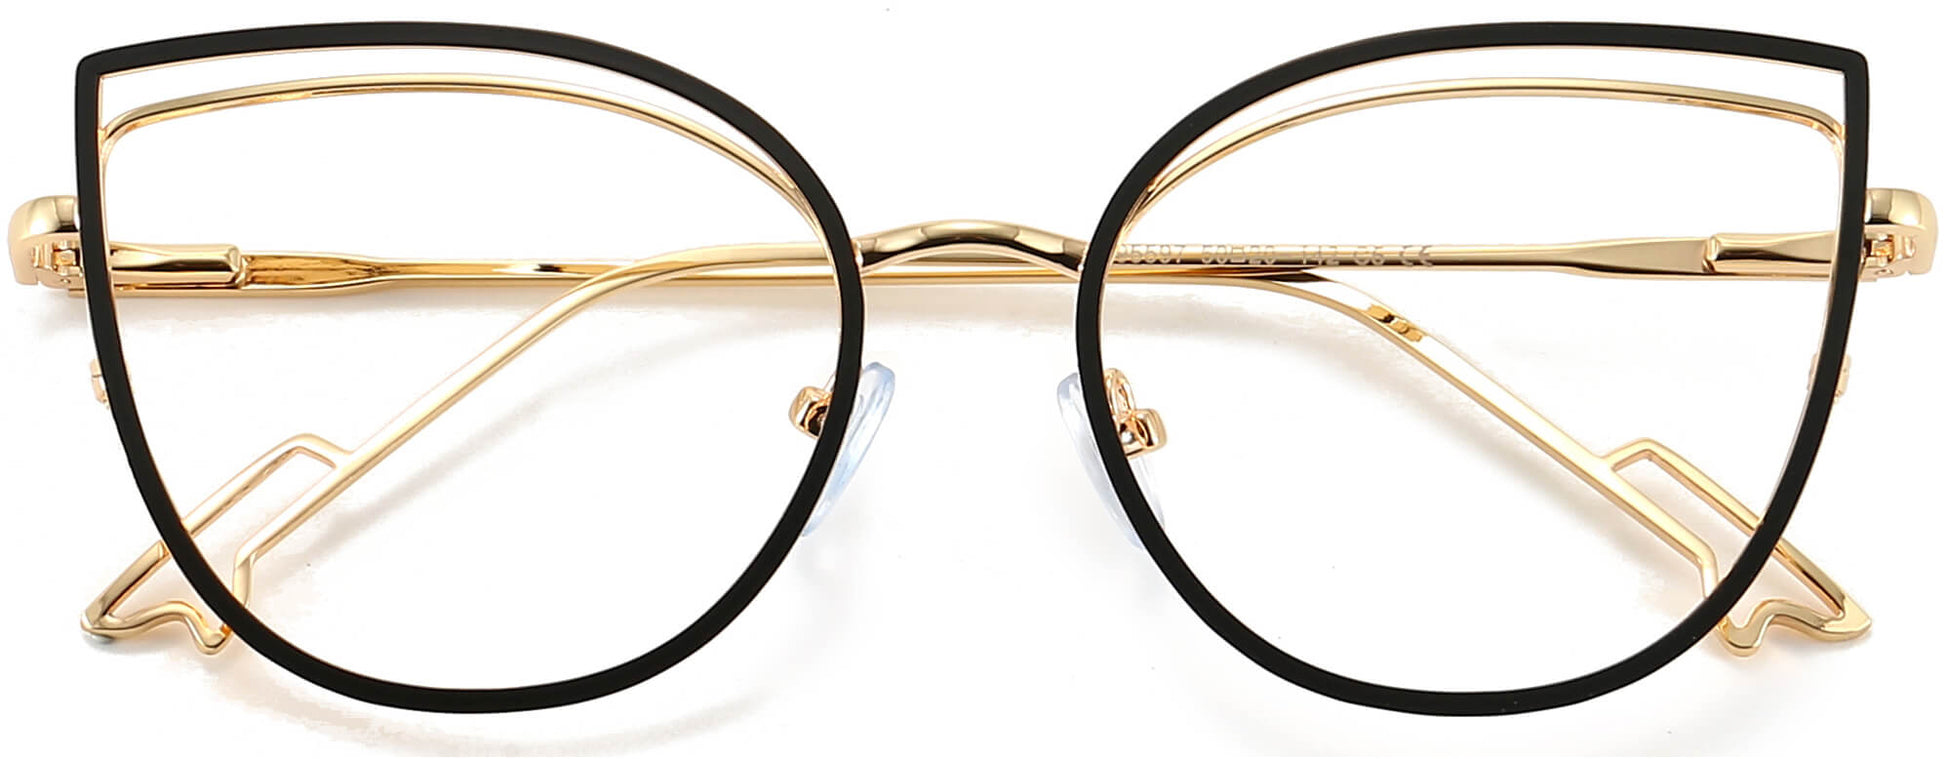 Bristol Cateye Black Eyeglasses from ANRRI, closed view